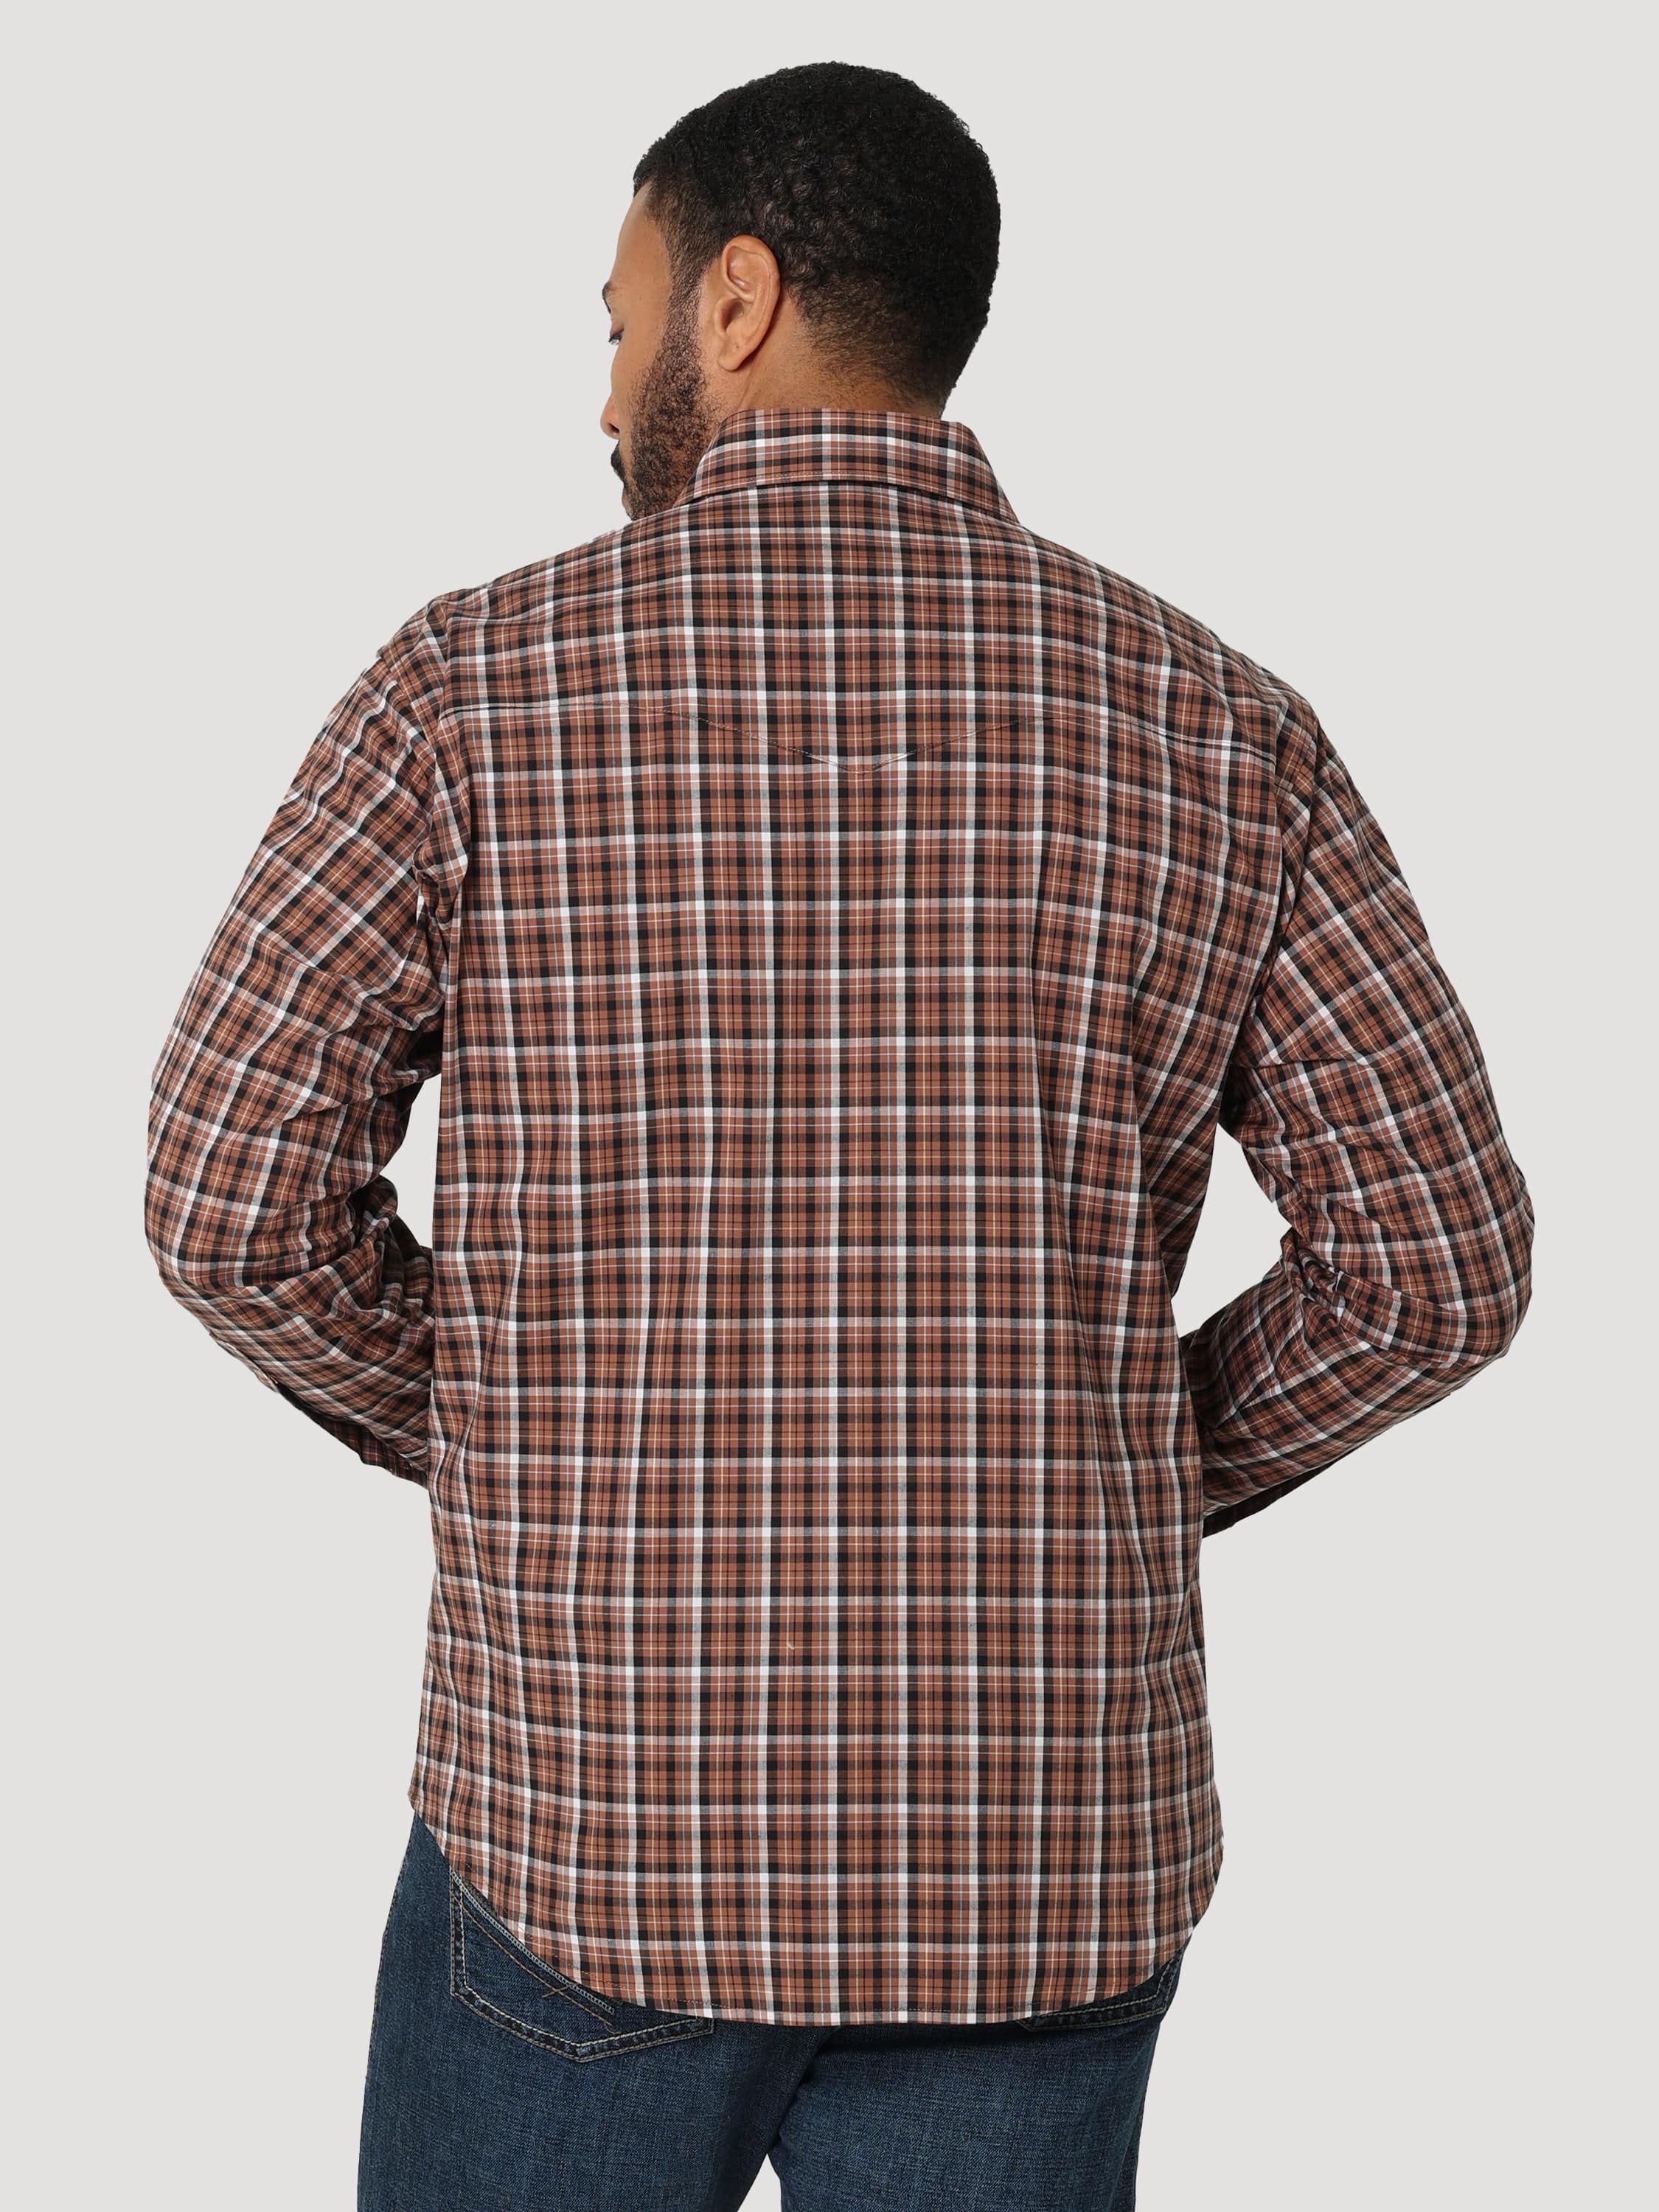 Wrangler Men's Wrinkle Resist Coffee Long Sleeve Western Plaid Shirt 1 -  Russell's Western Wear, Inc.